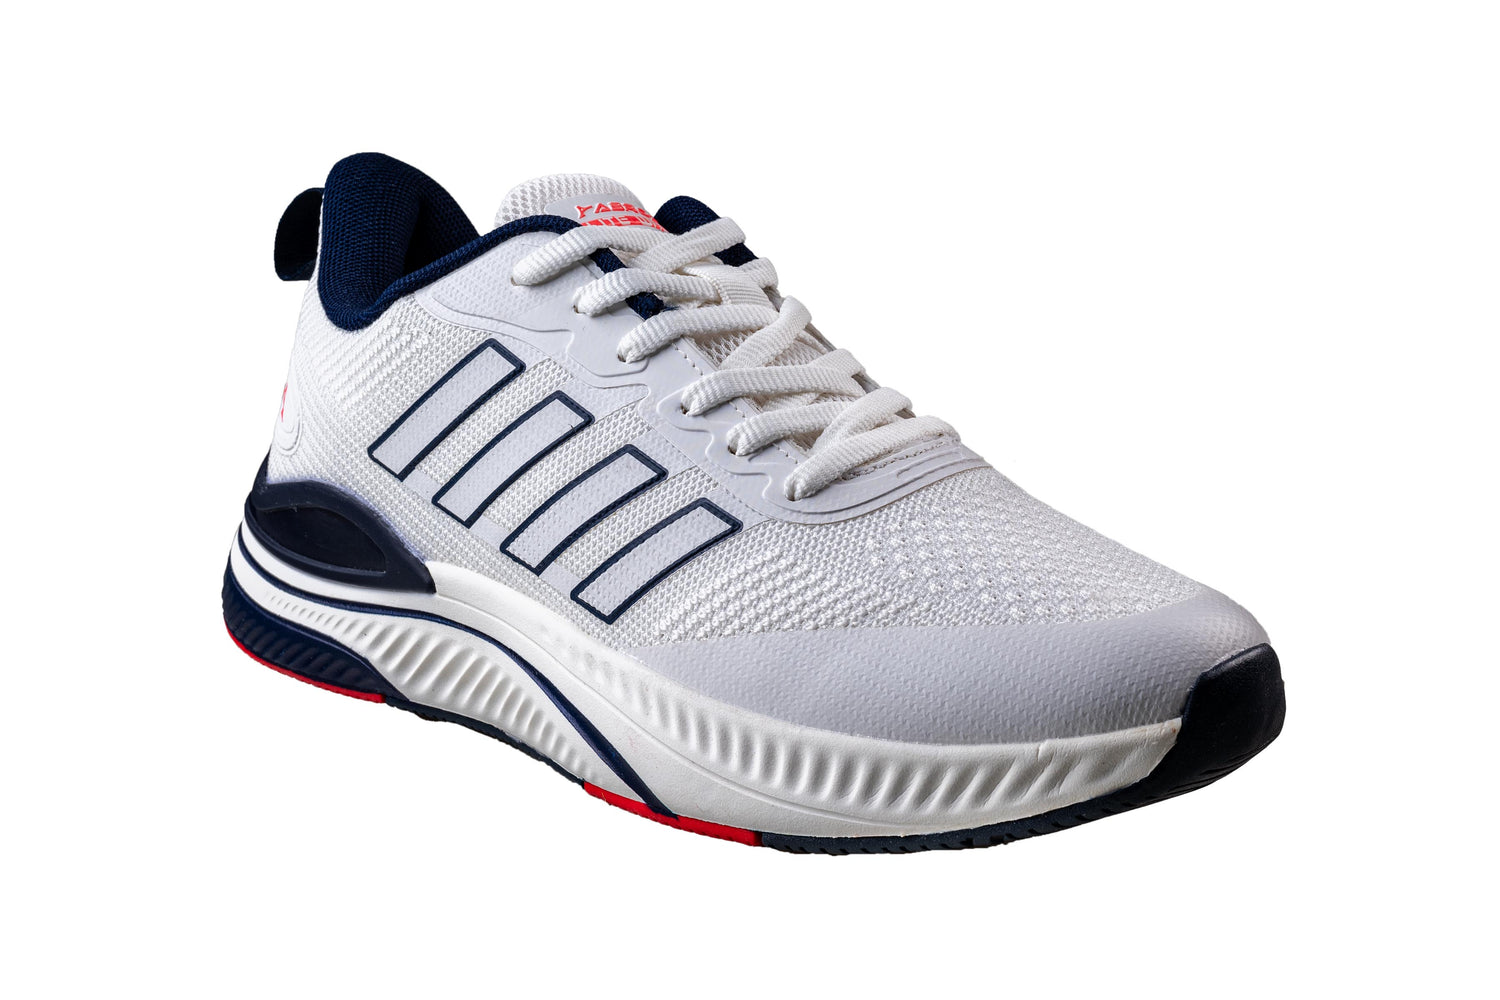 Abros Gents White / Navy Sports Shoe